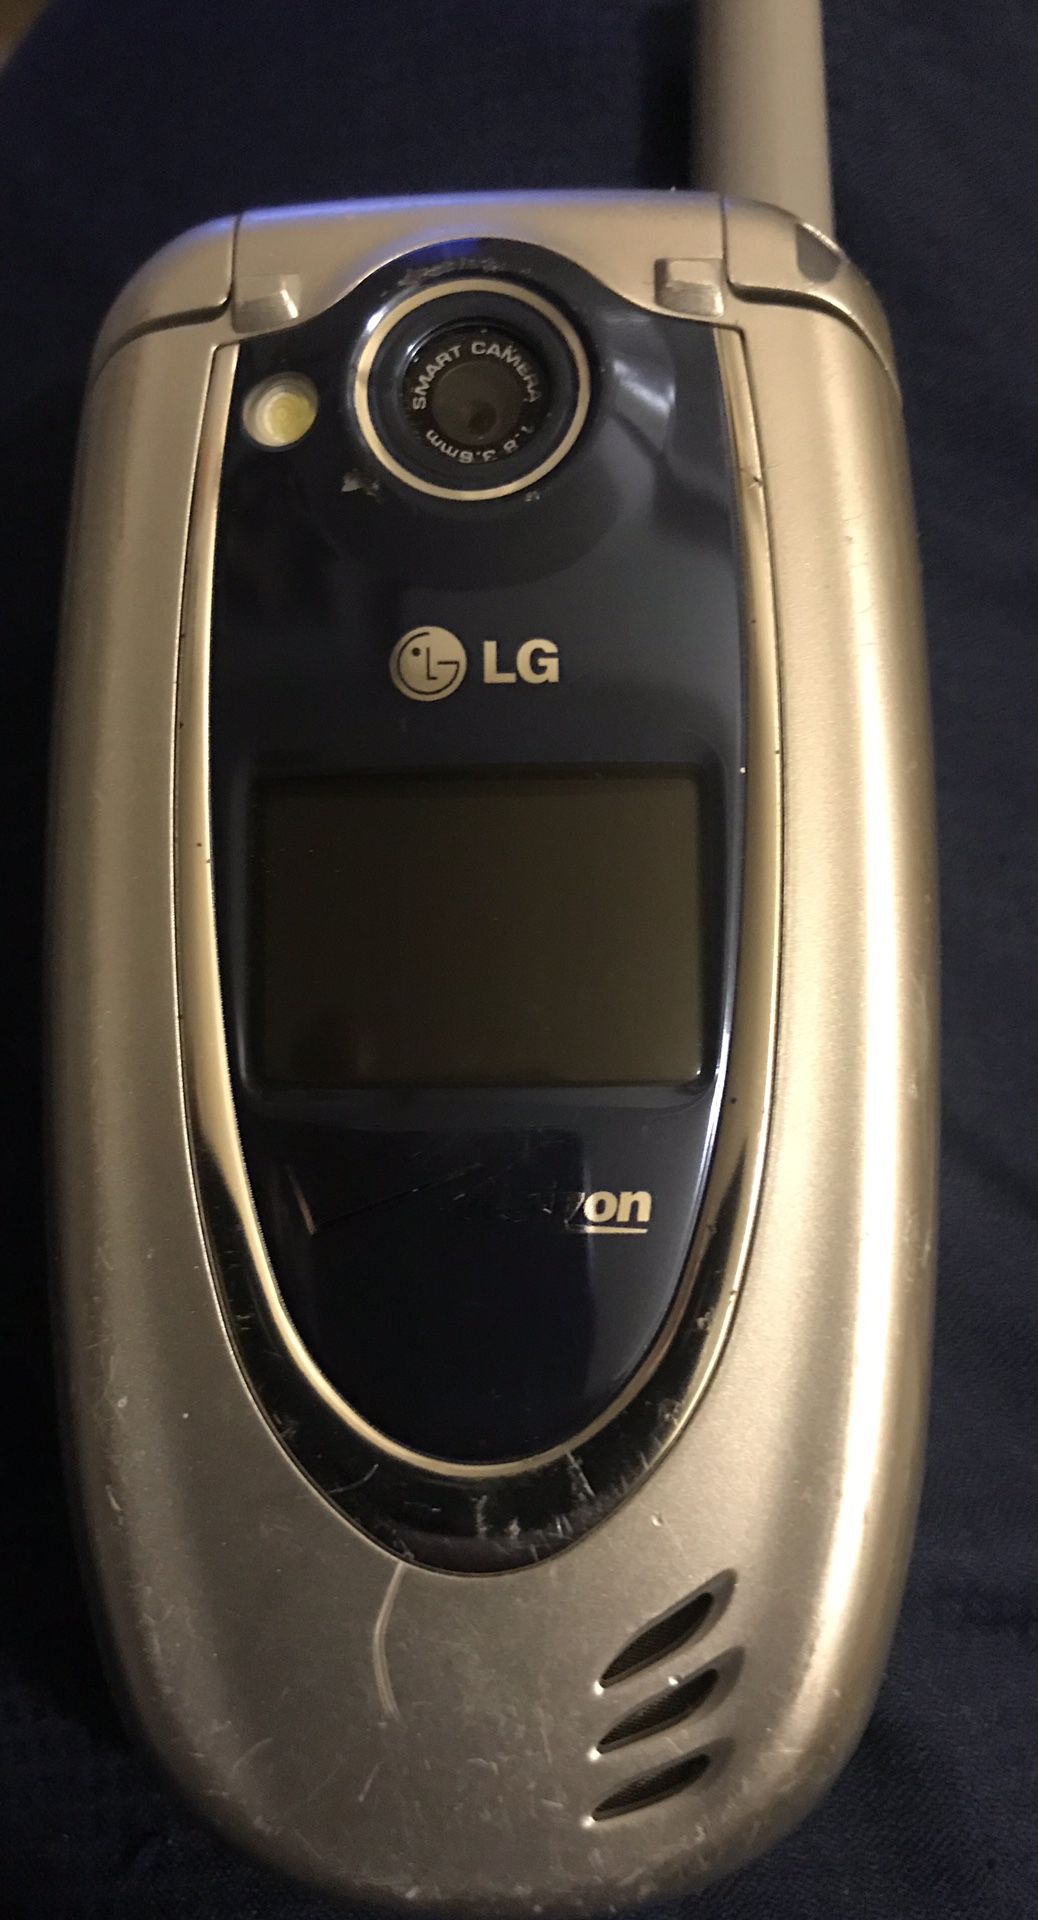 LG vx5200 cell phone